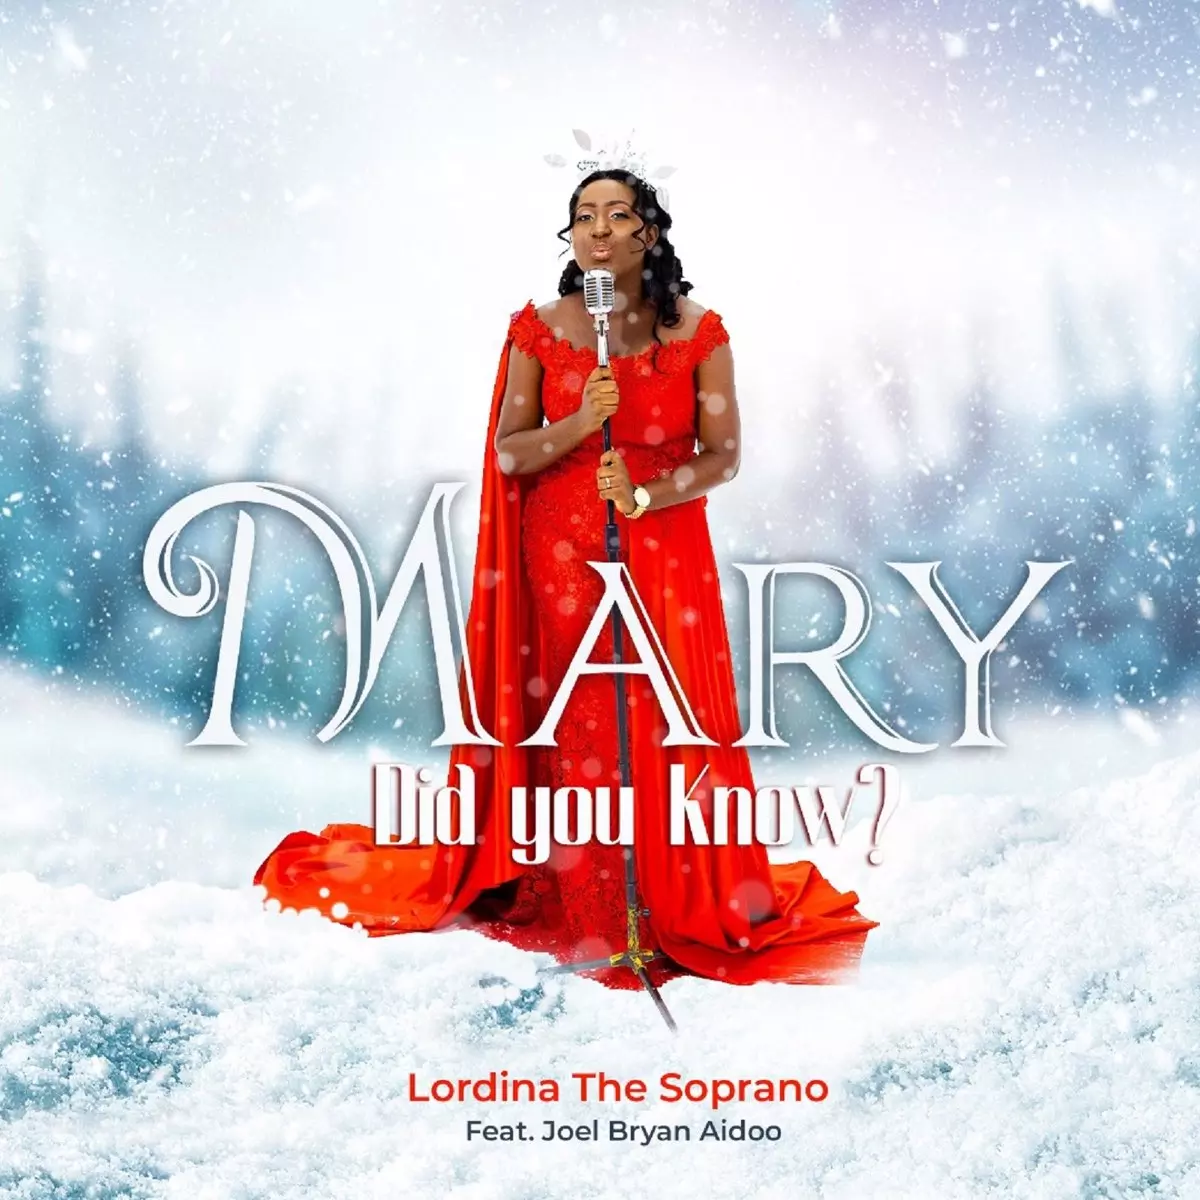 Mary, Did You Know? - Single (feat. Joel Bryan Aidoo) - Single by Lordina The Soprano on Apple Music